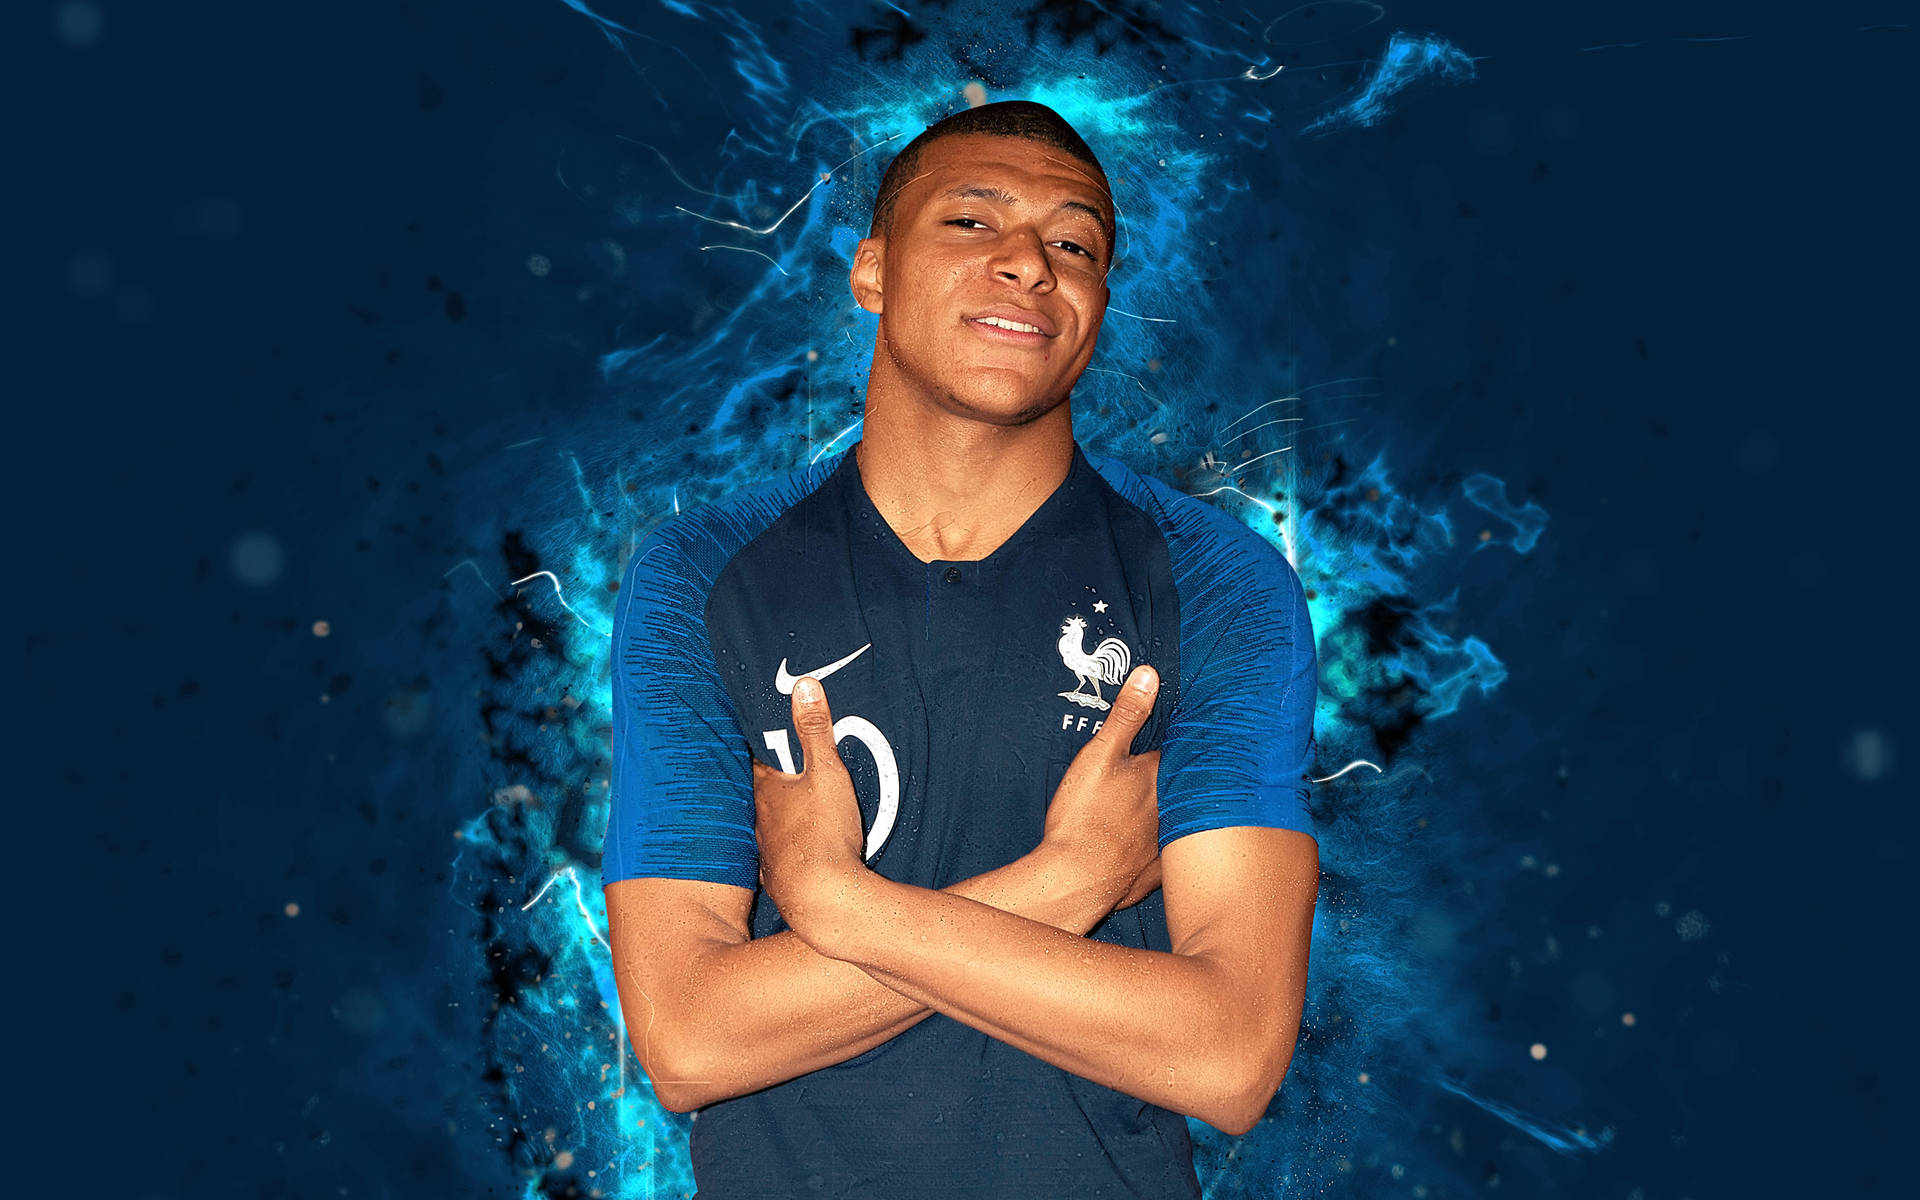 French Footballer Mbappe Fanart Background